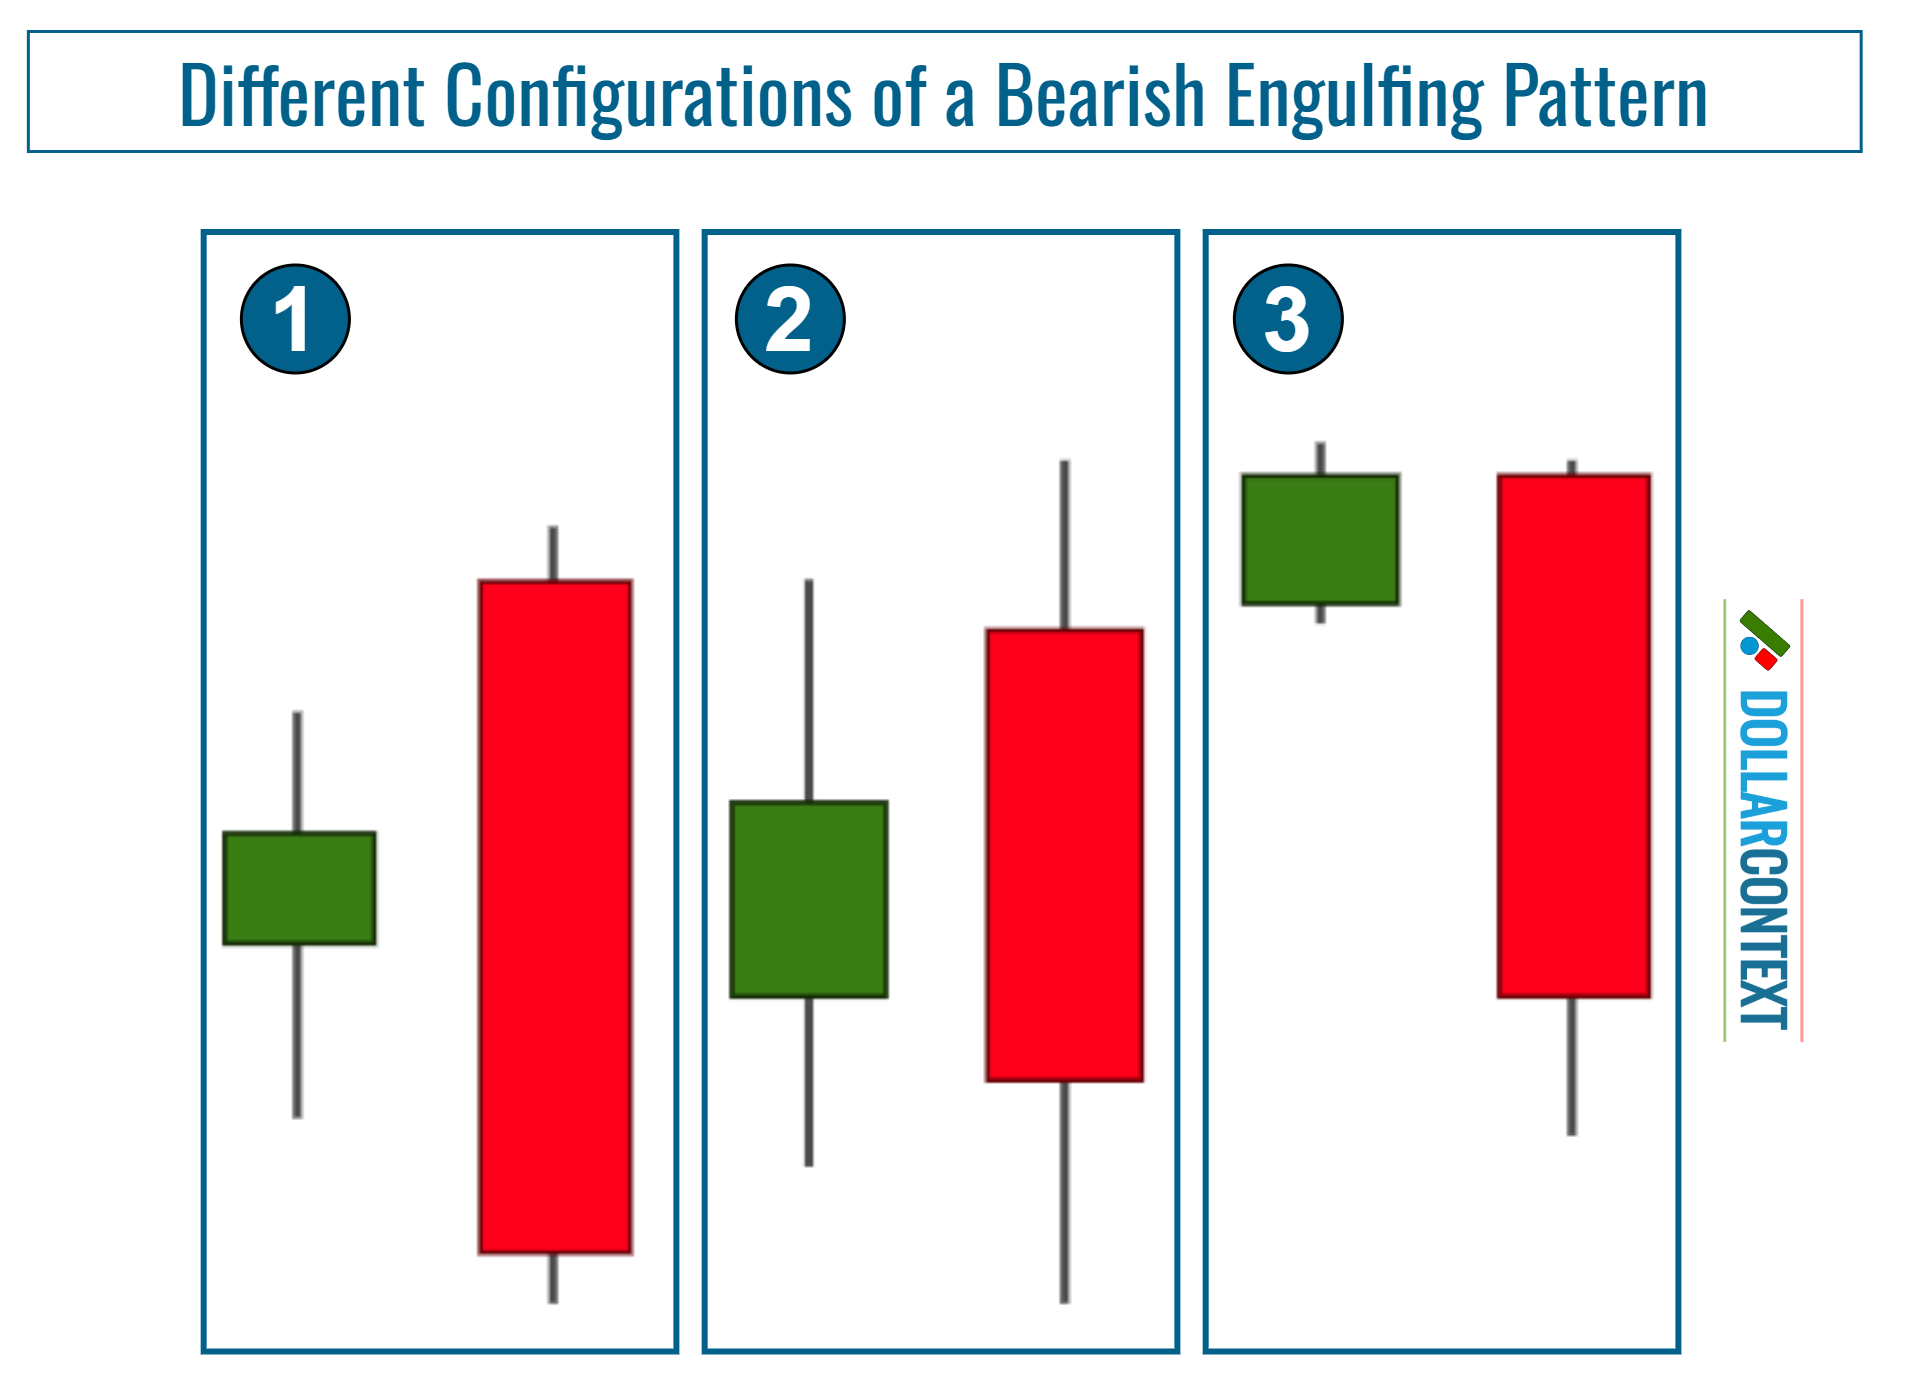 Different Configurations of a Bearish Engulfing Pattern